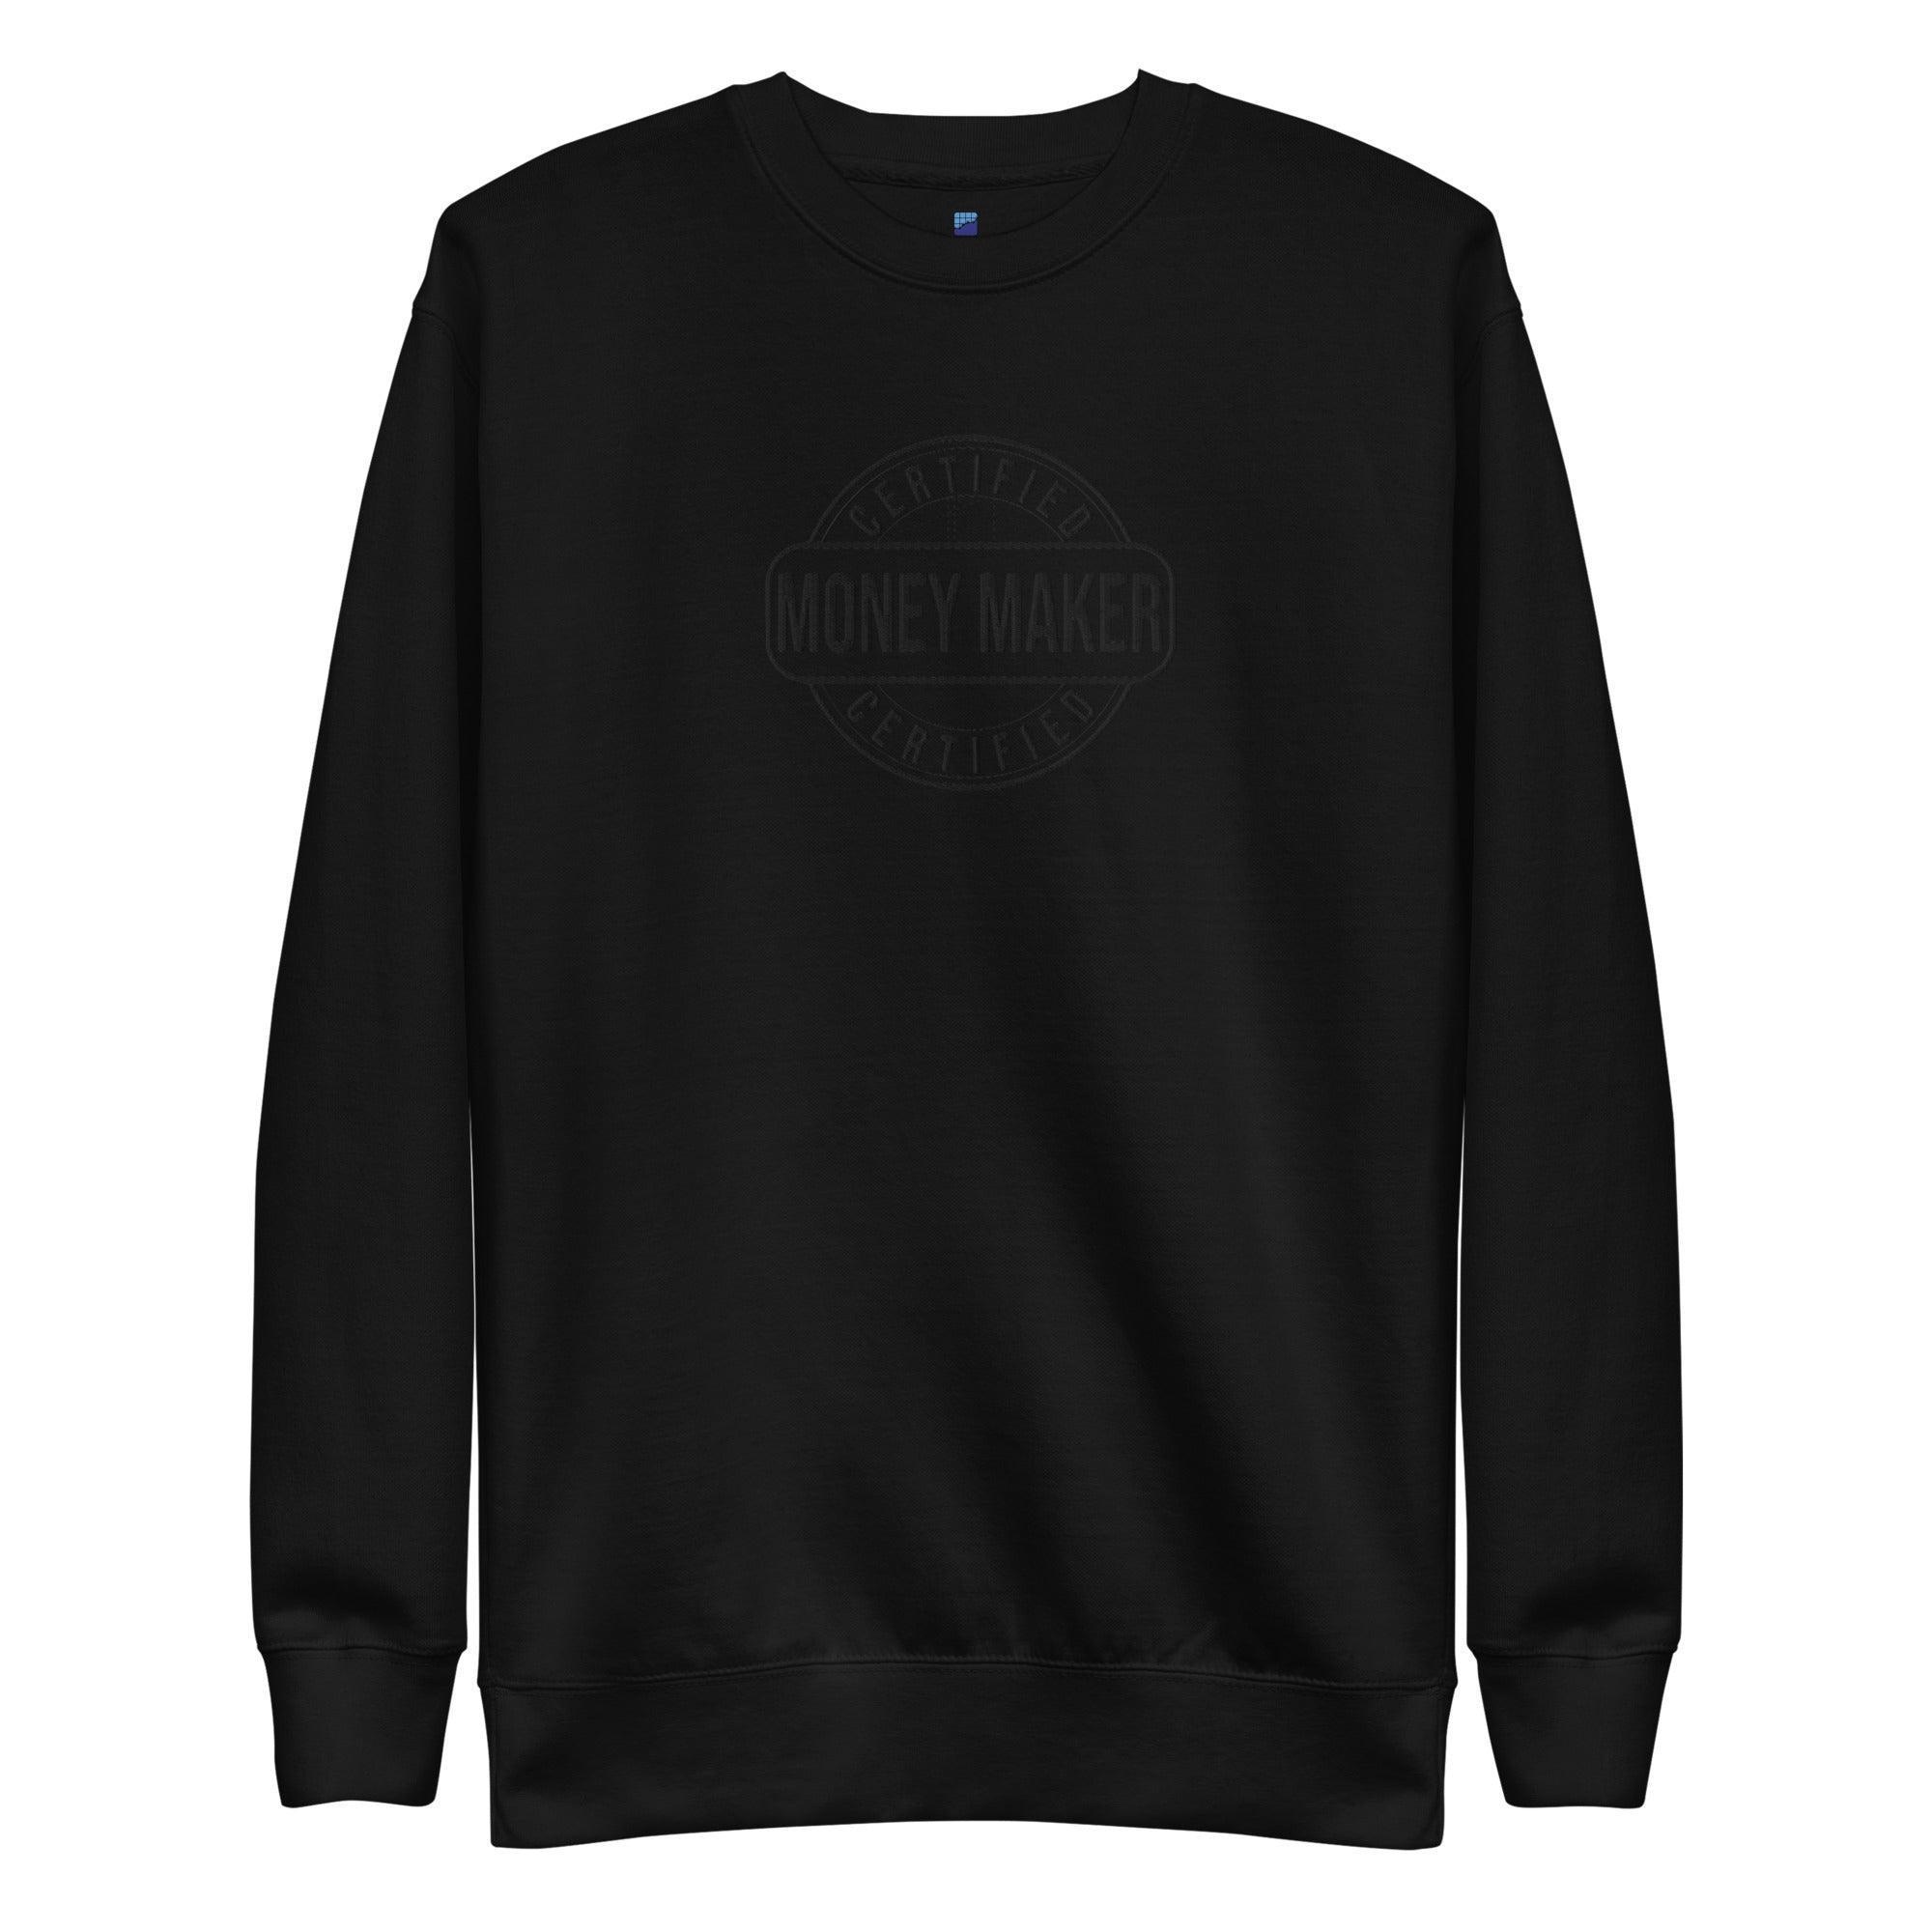 Certified Money Maker Sweatshirt - InvestmenTees